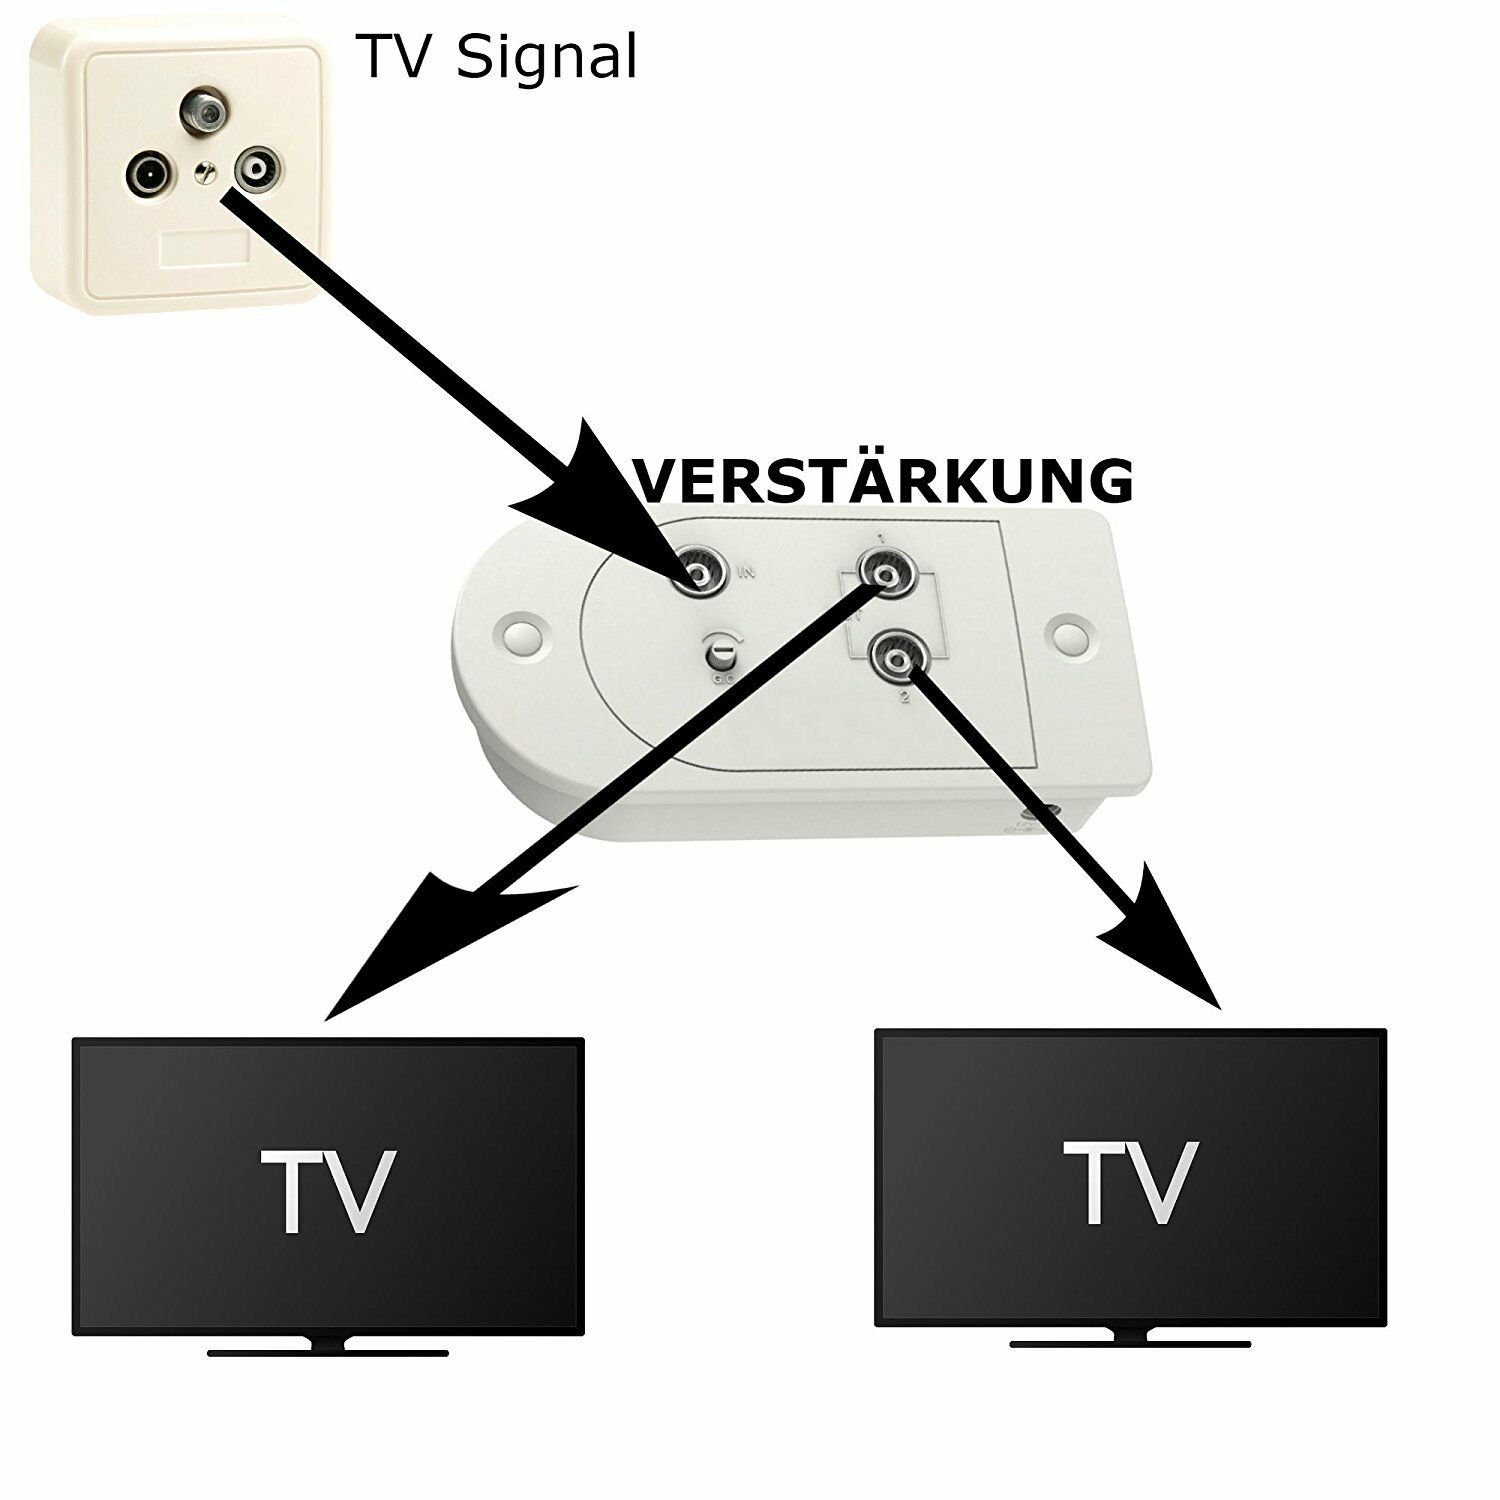 TronicXL Verstärker Kabelfernsehen Weiche Leistungsverstärker Splitter DVB-T DVB-C Verstärker